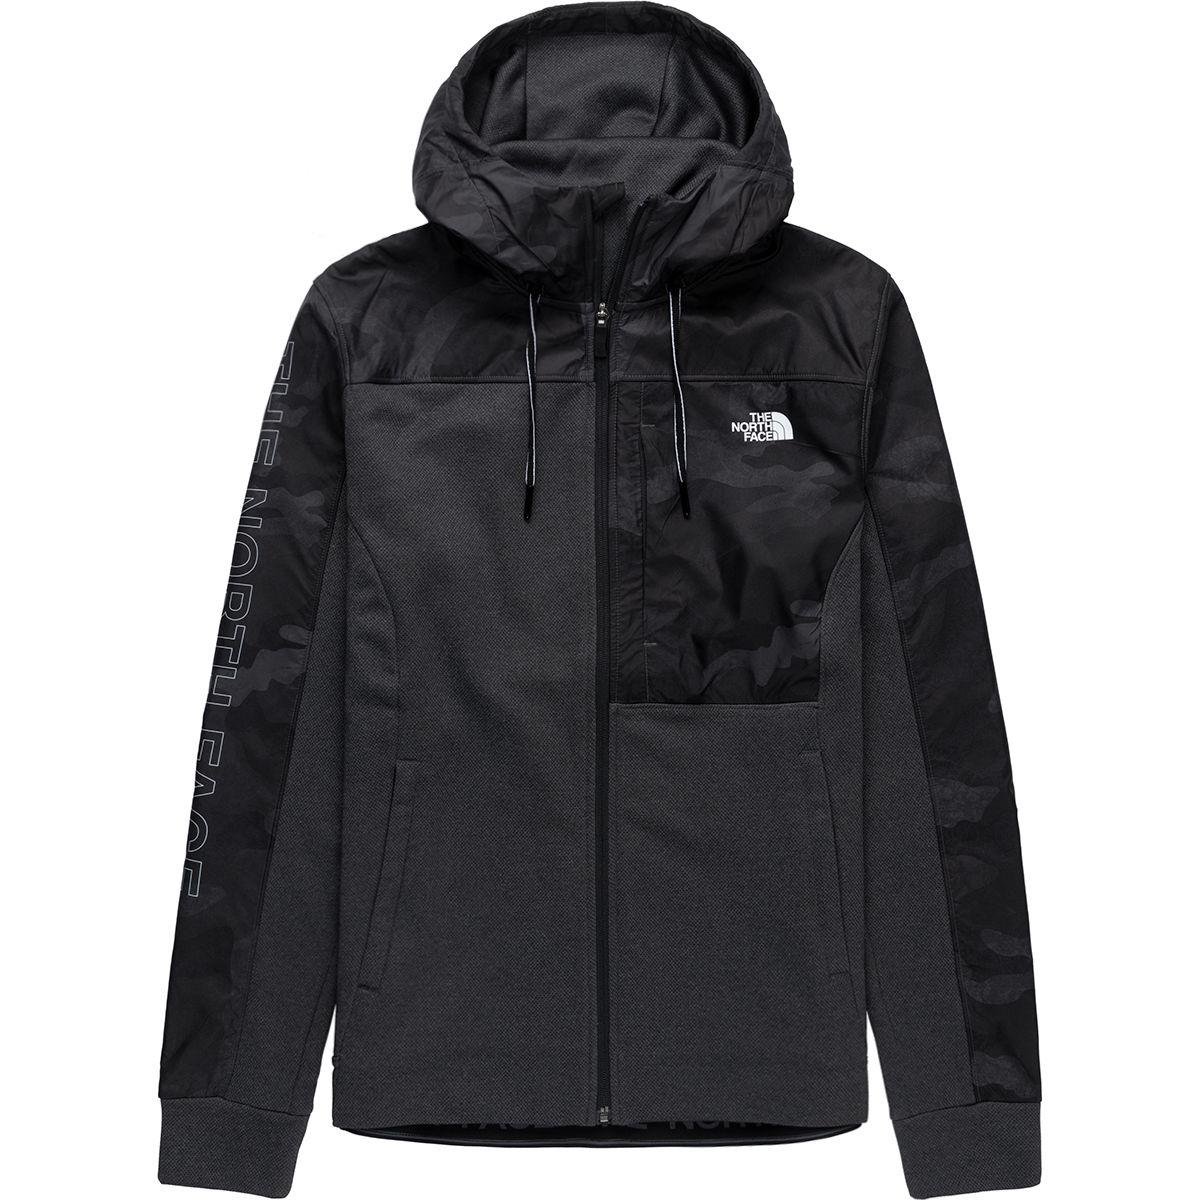 The North Face Essential Fleece Full-zip Hoodie in Black for Men - Lyst